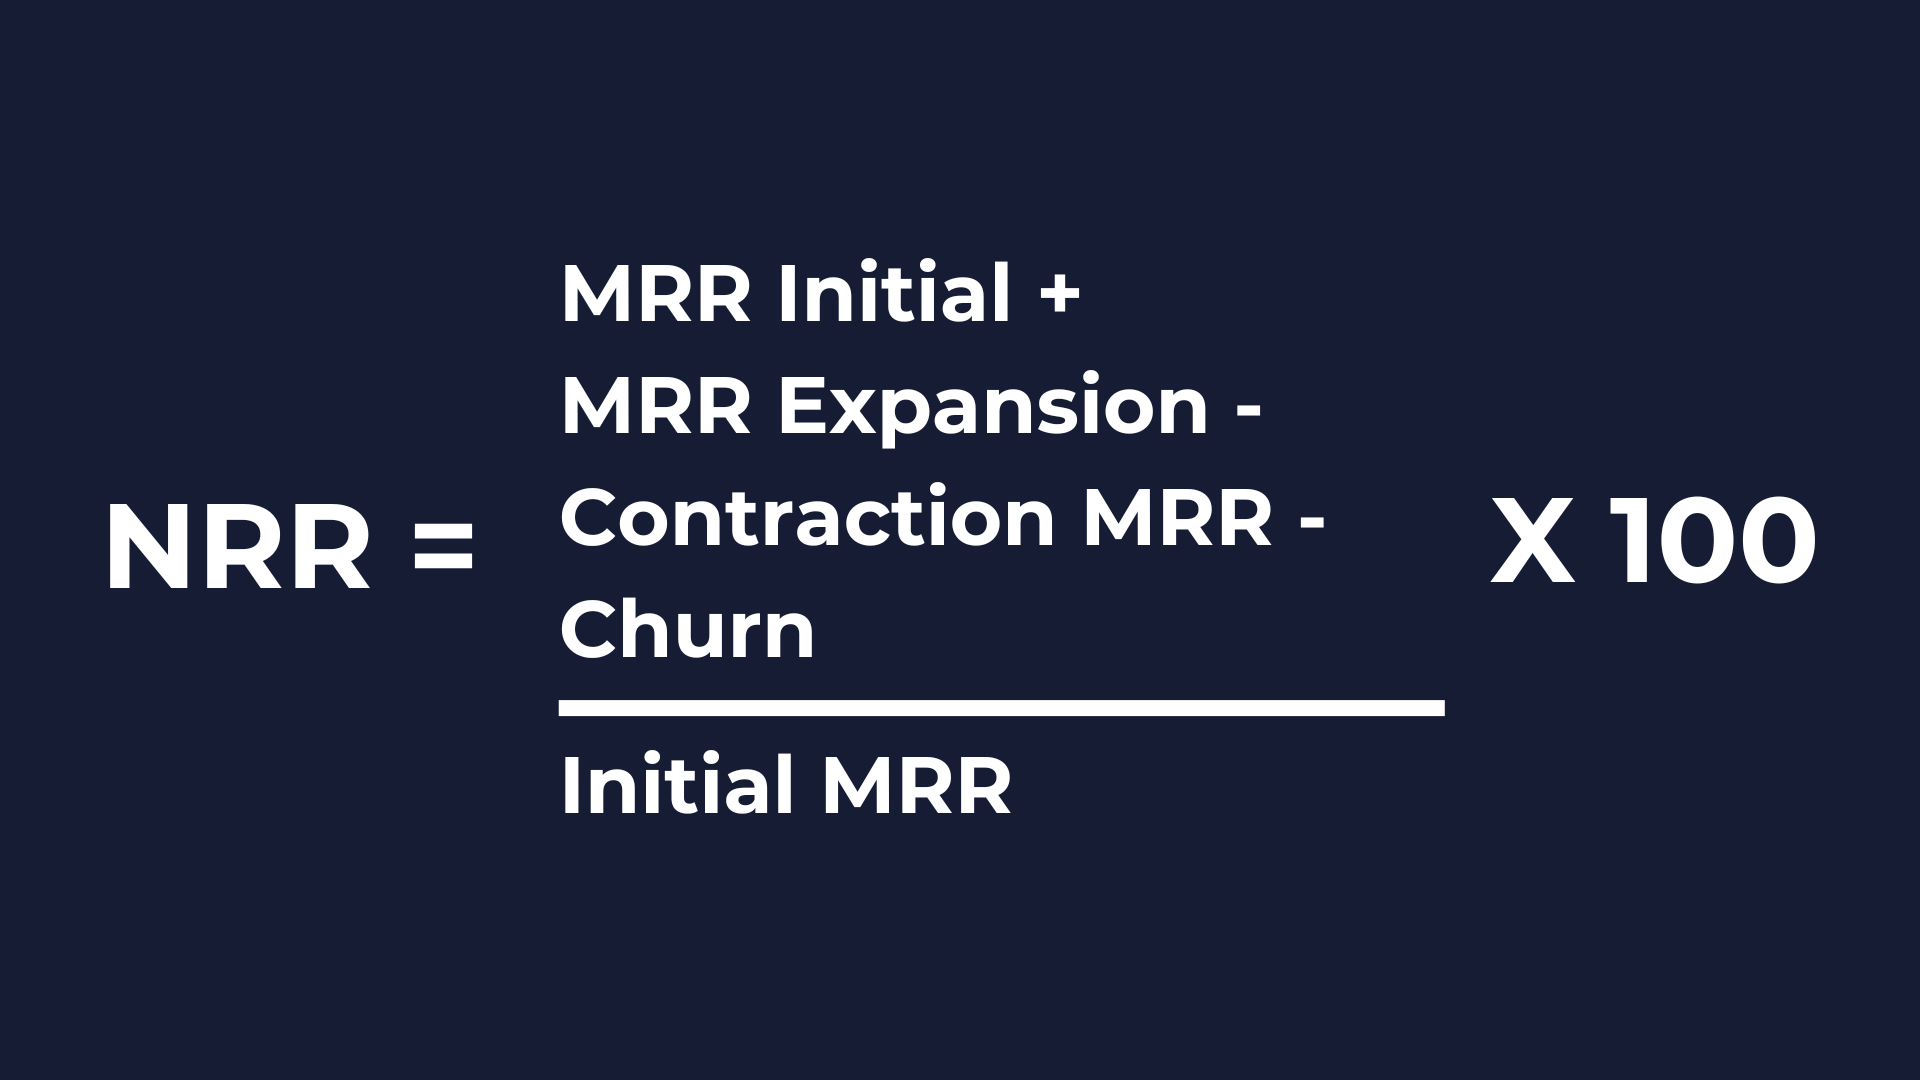 NRR = (MRR Initial + Expansion MRR - Contraction MRR - Churn) / MRR Initial